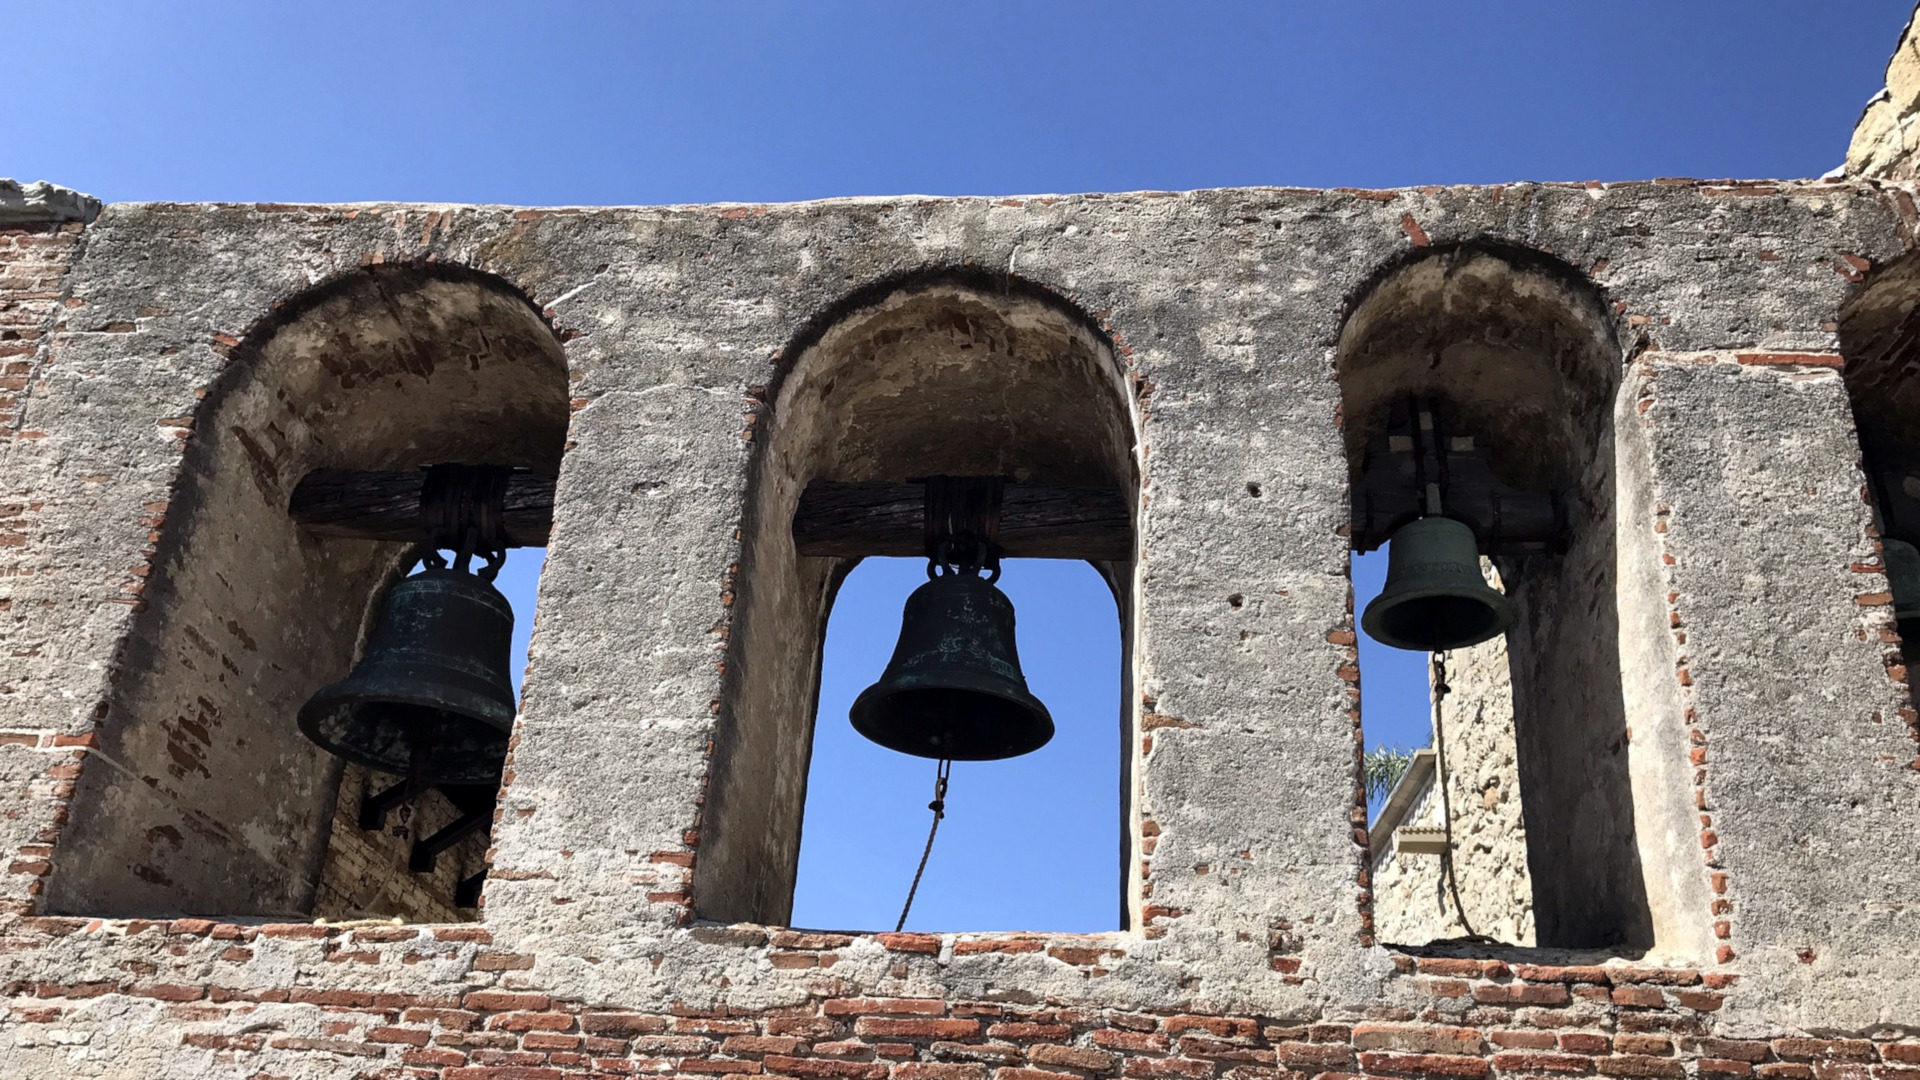 Glocken, Botschafterinnen der Kirche